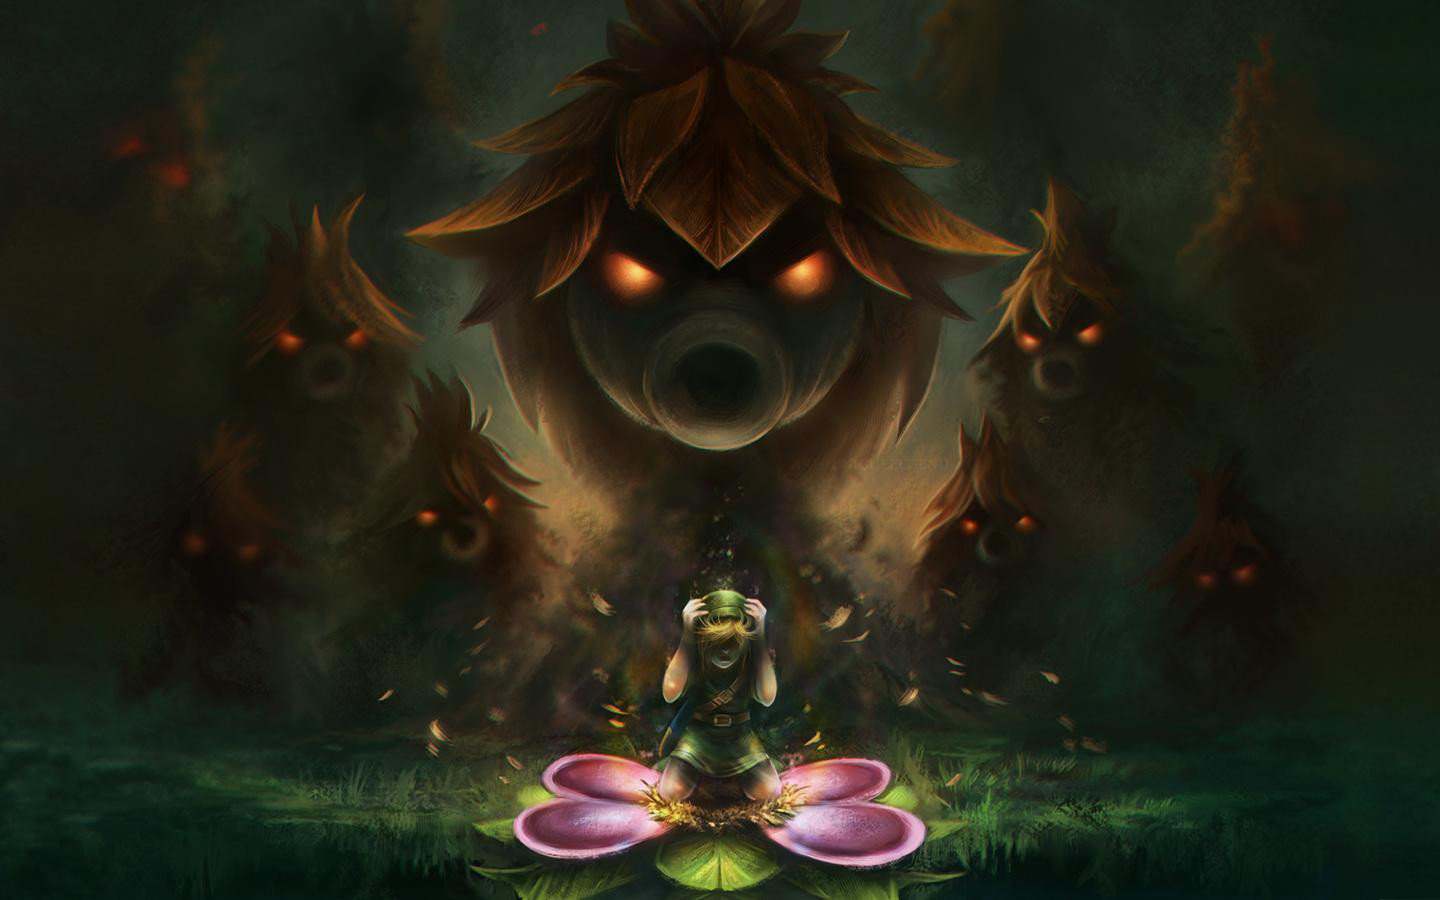 Best The Legend Of Zelda: Majora's Mask background ID:145447 for High Resolution hd 1440x900 computer